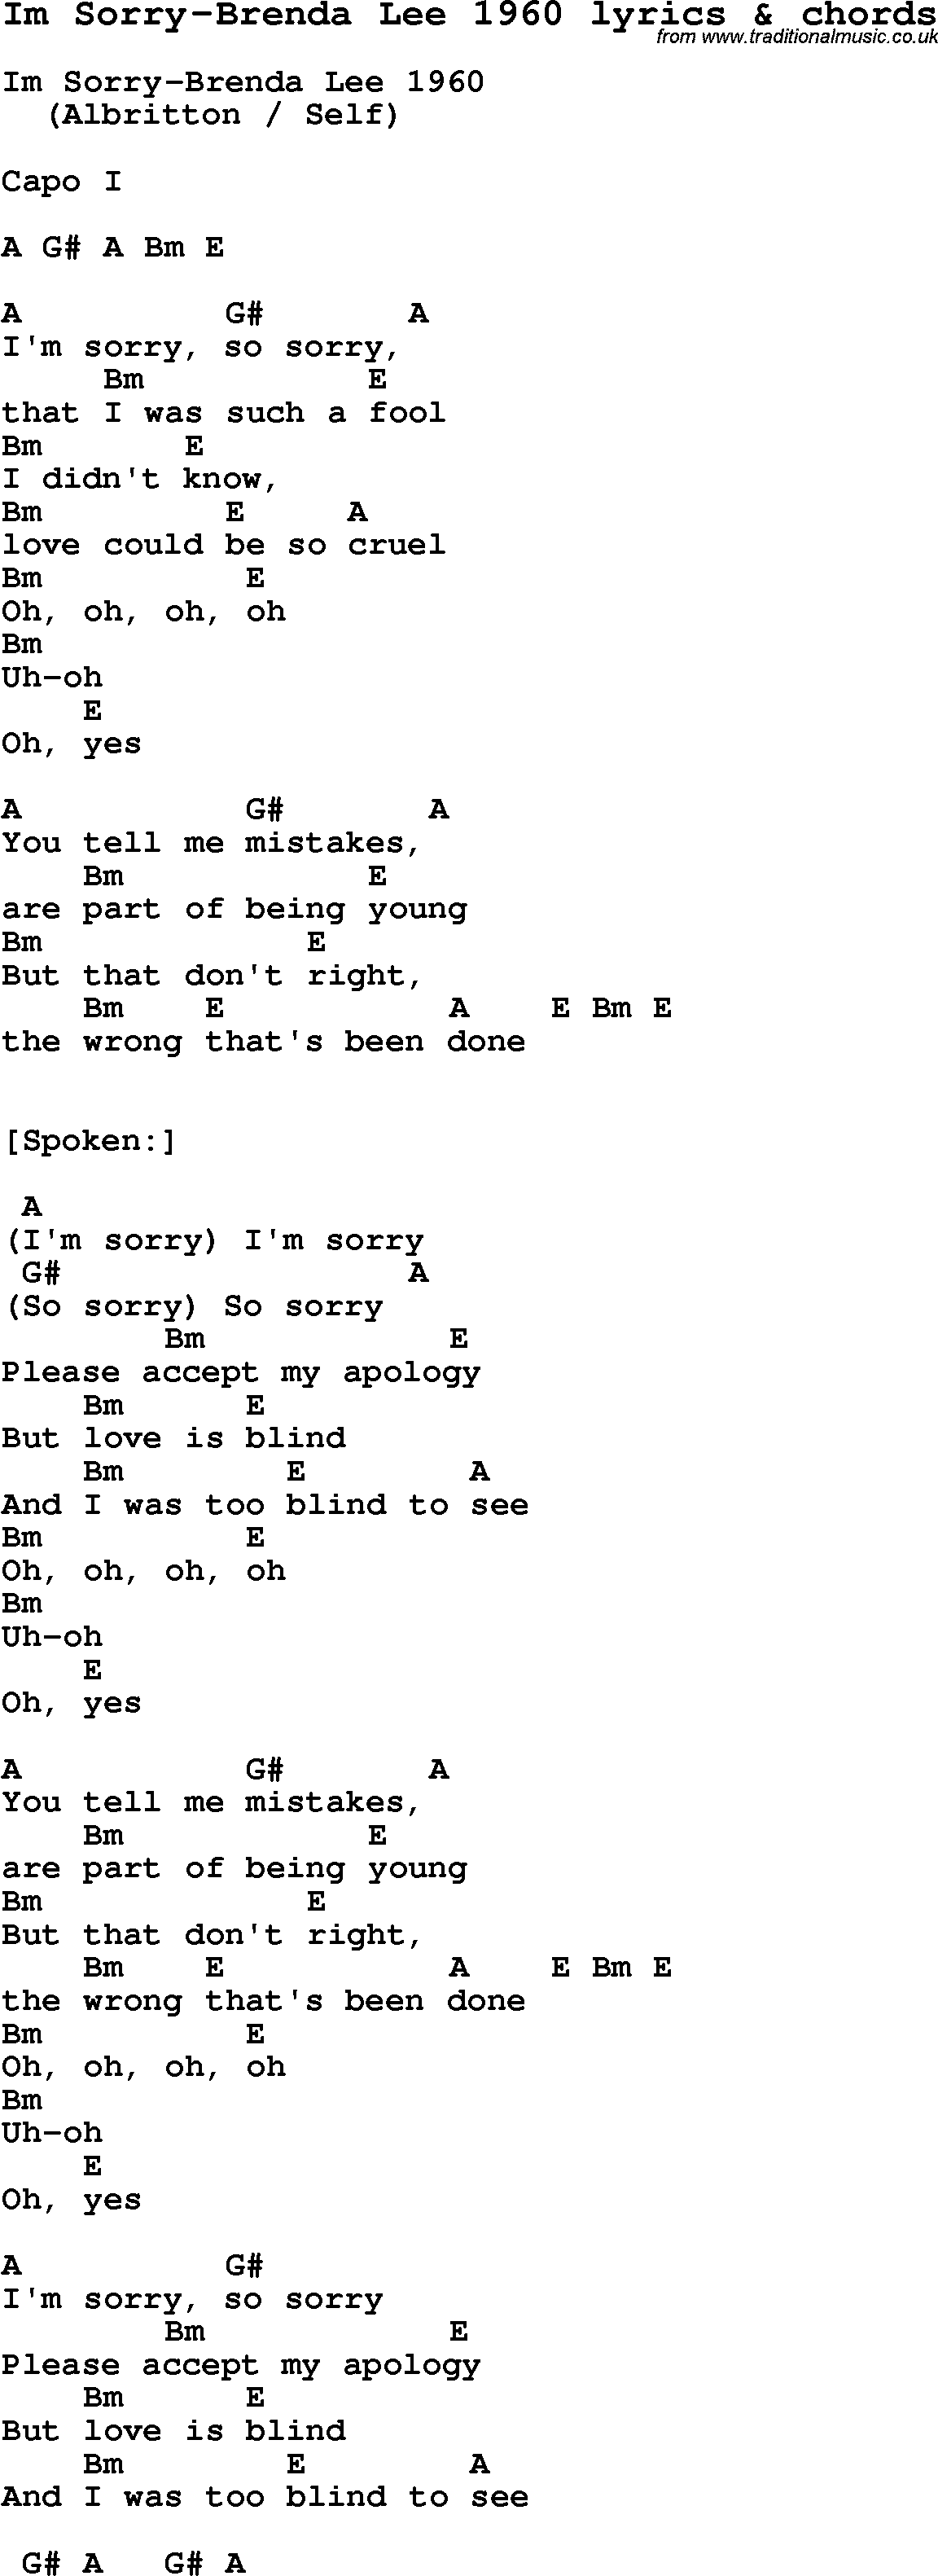 Love Song Lyrics for: Im Sorry-Brenda Lee 1960 with chords for Ukulele, Guitar Banjo etc.